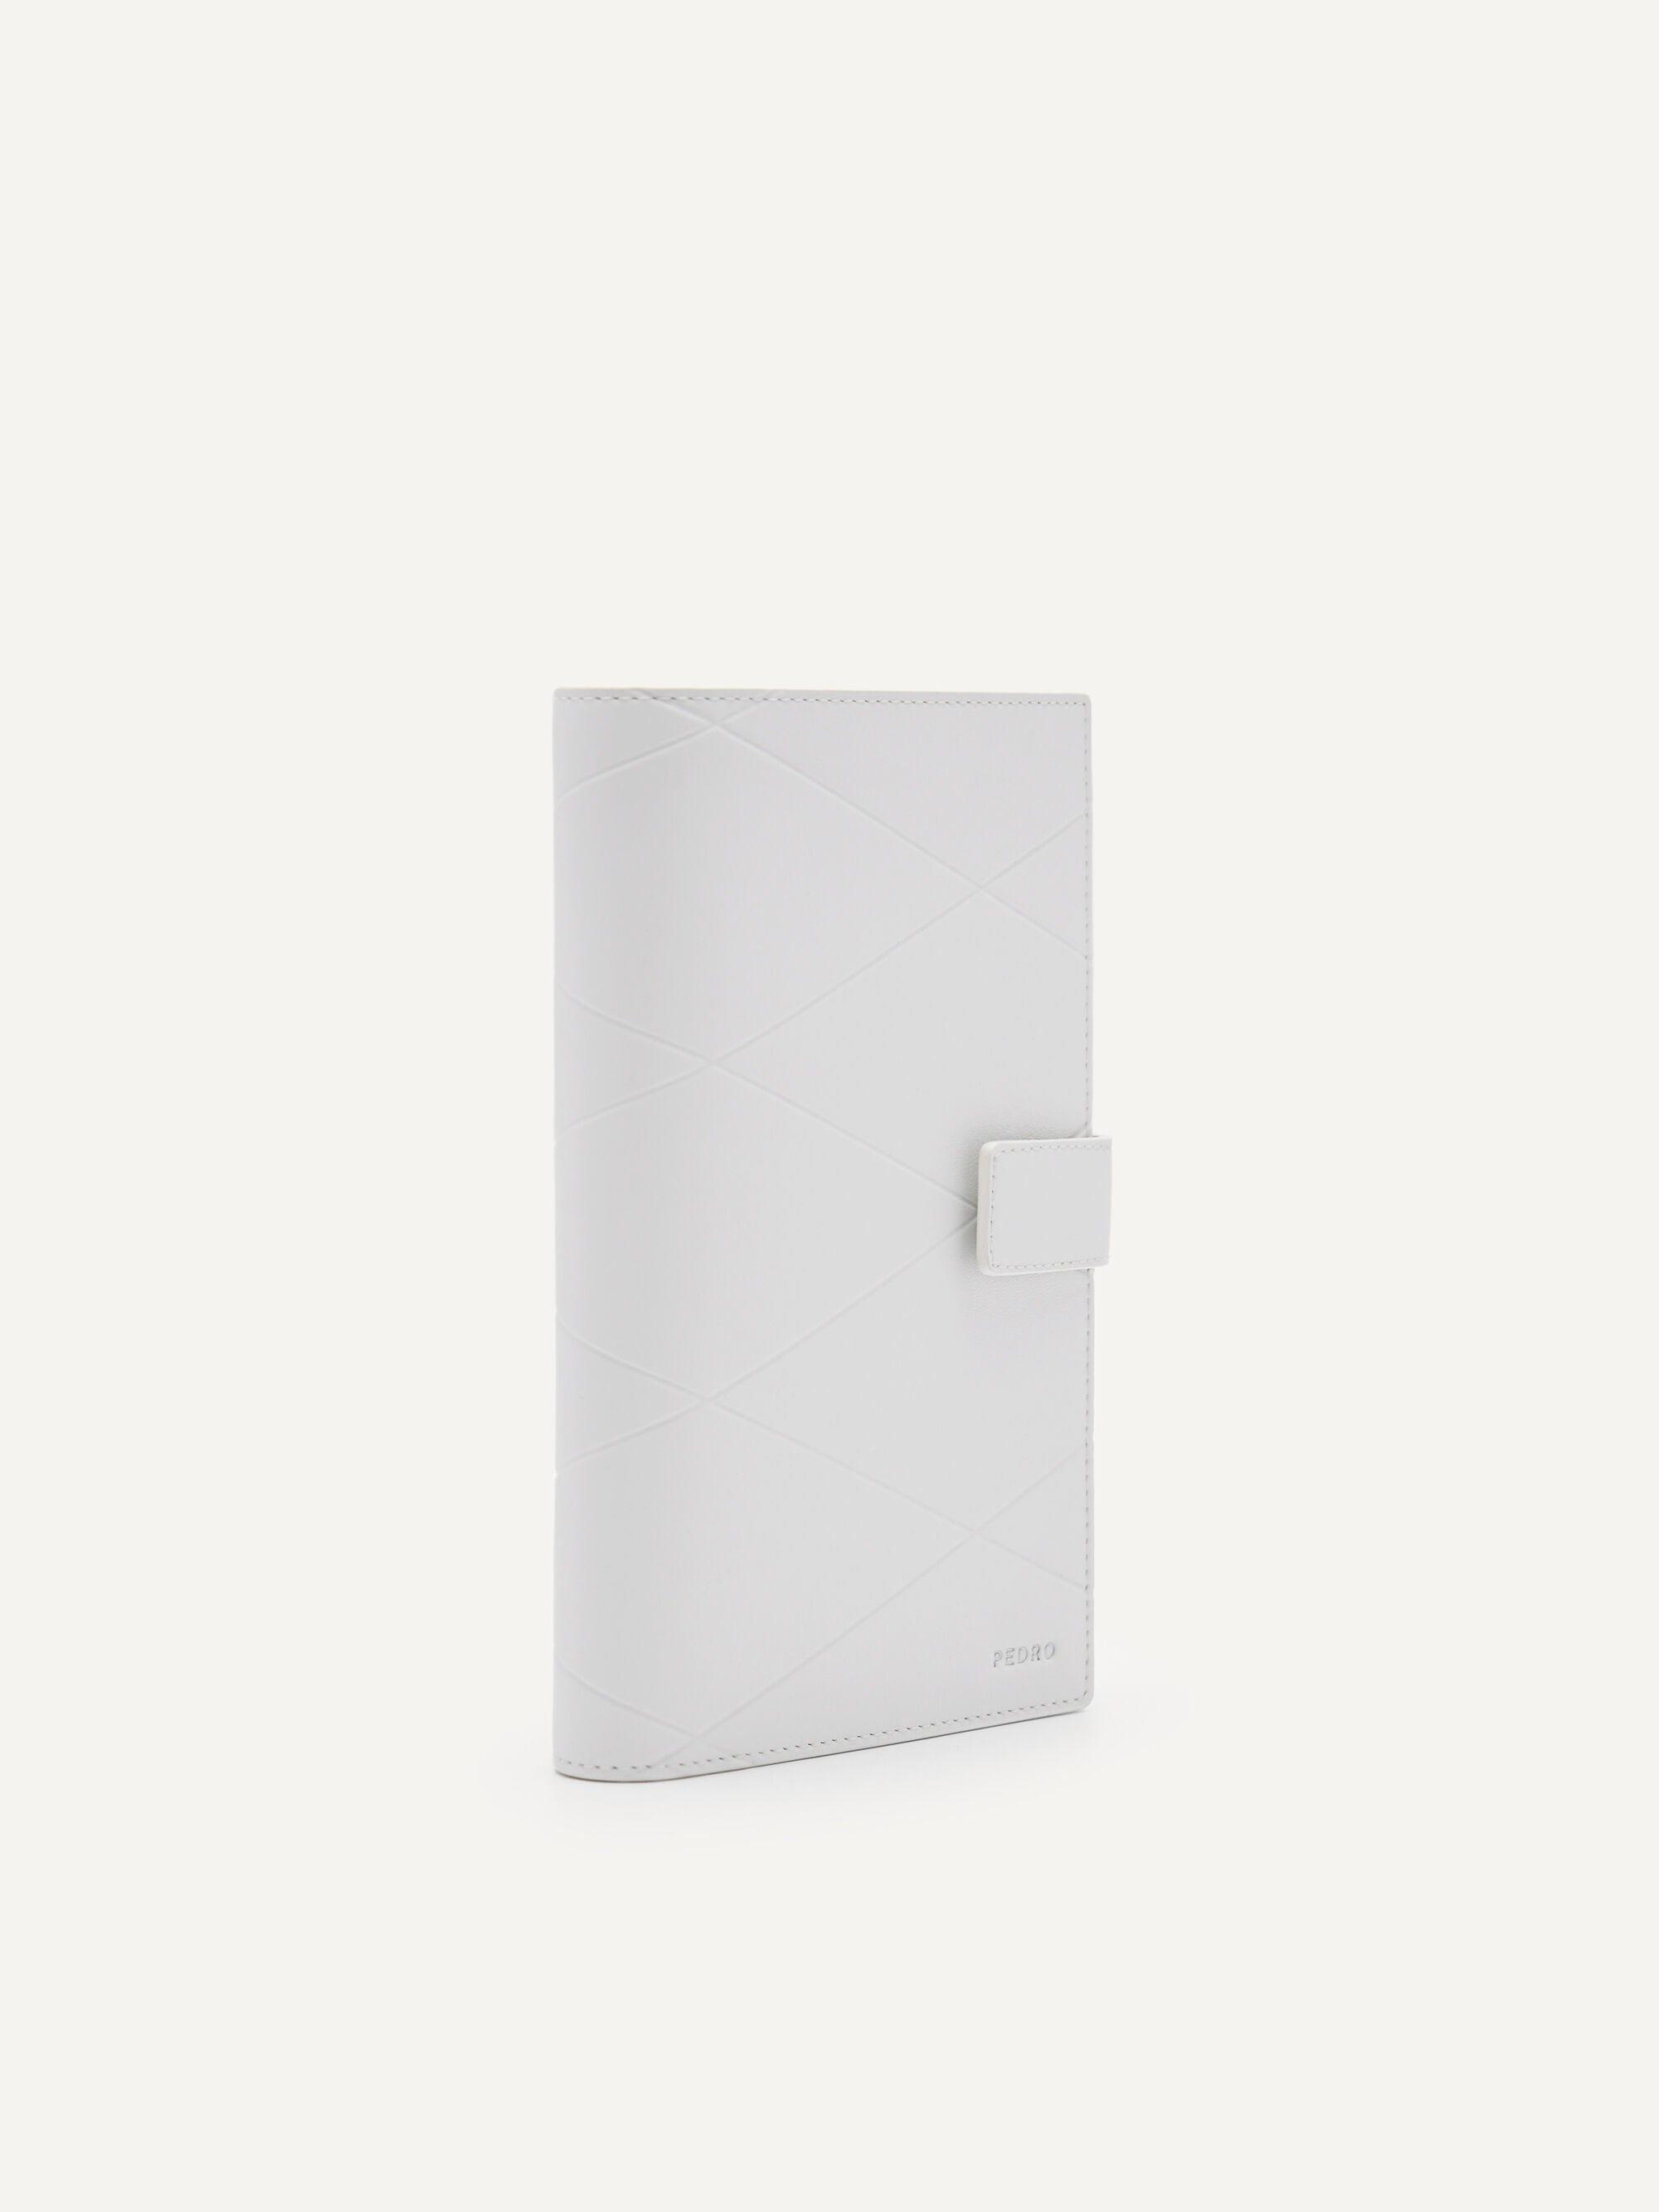 Leather Micro Bi-Fold Travel Organiser, White